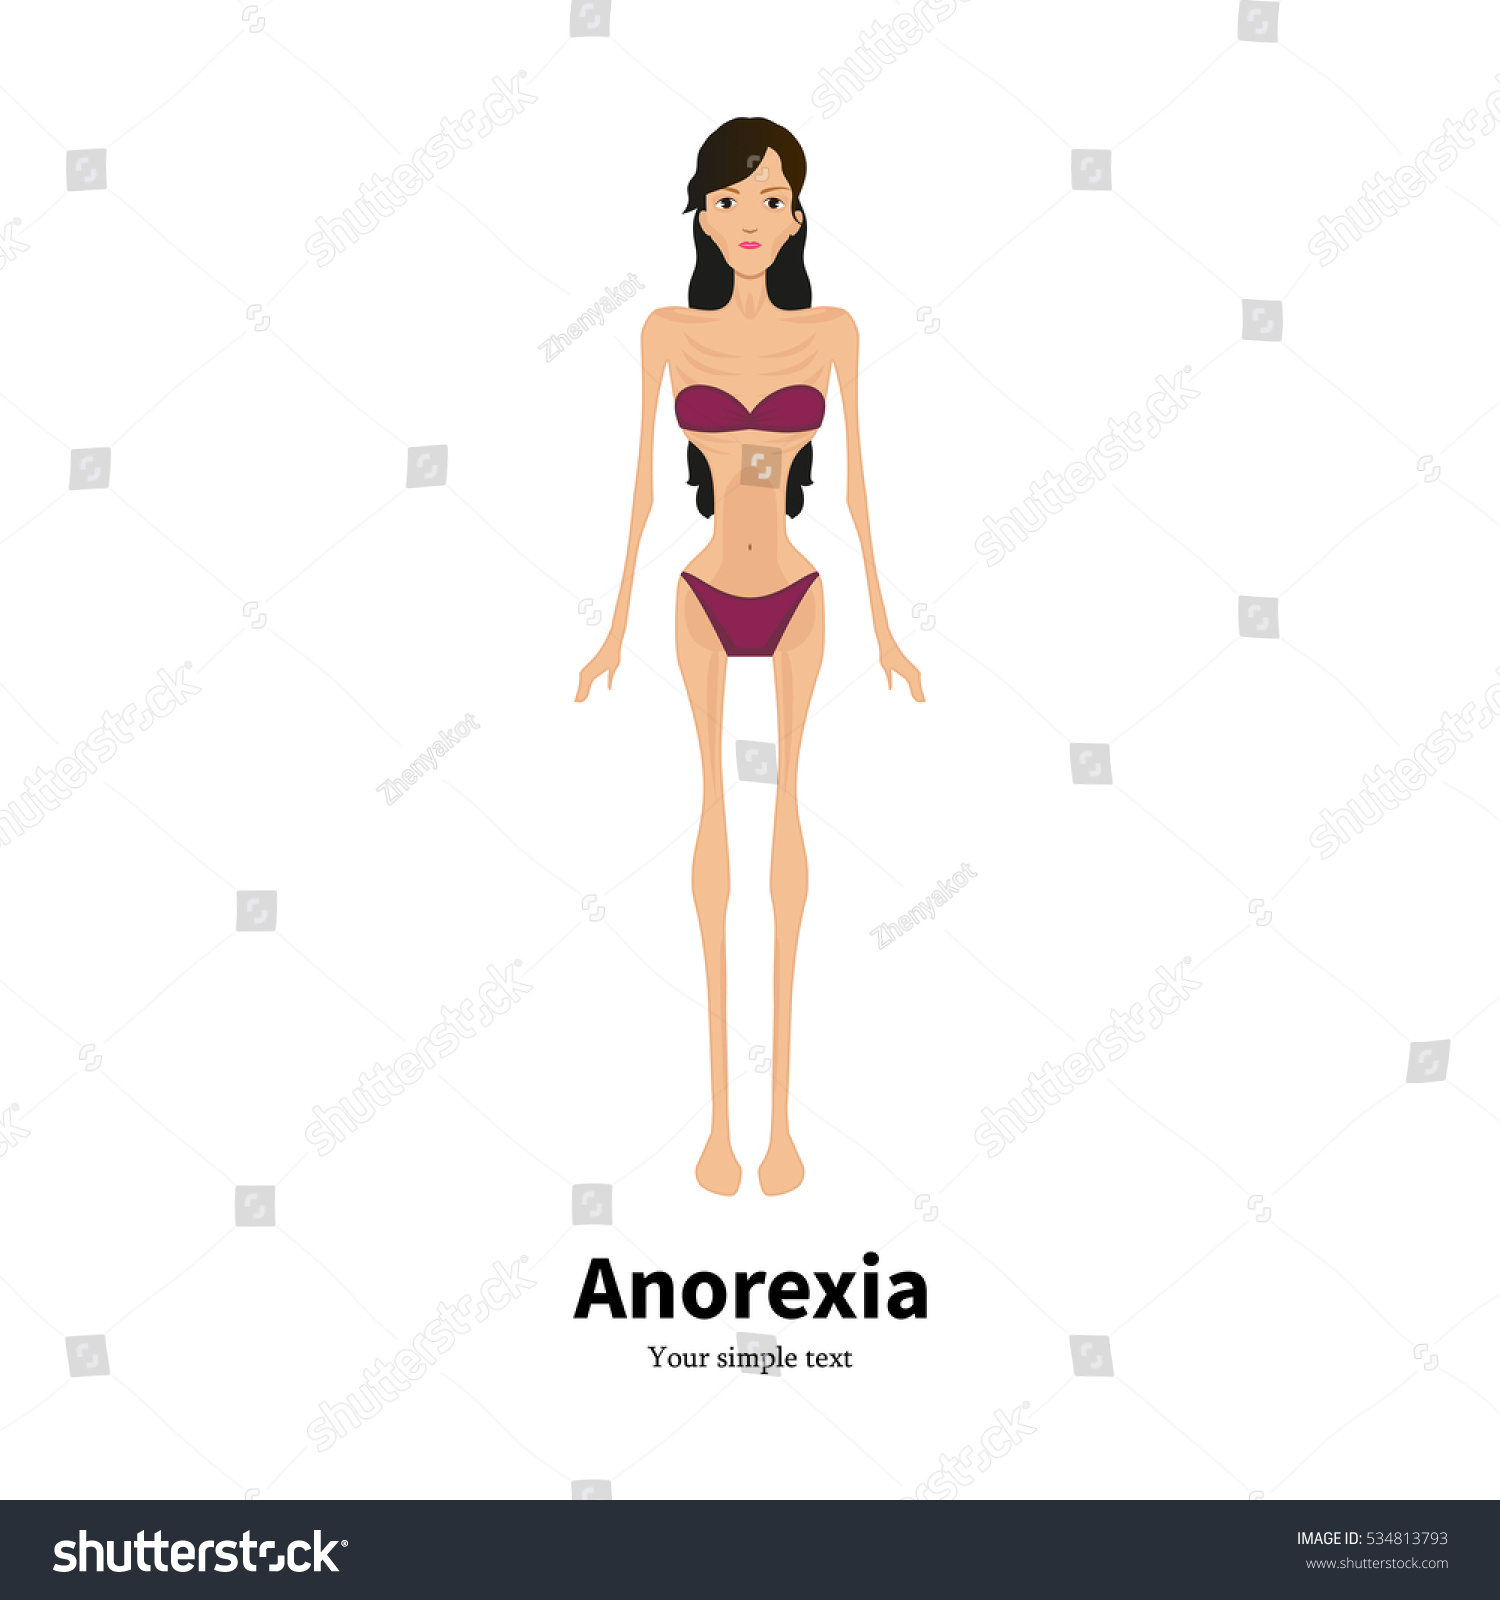 Vector Illustration Cartoon Girl Anorexia Nervosa Stock